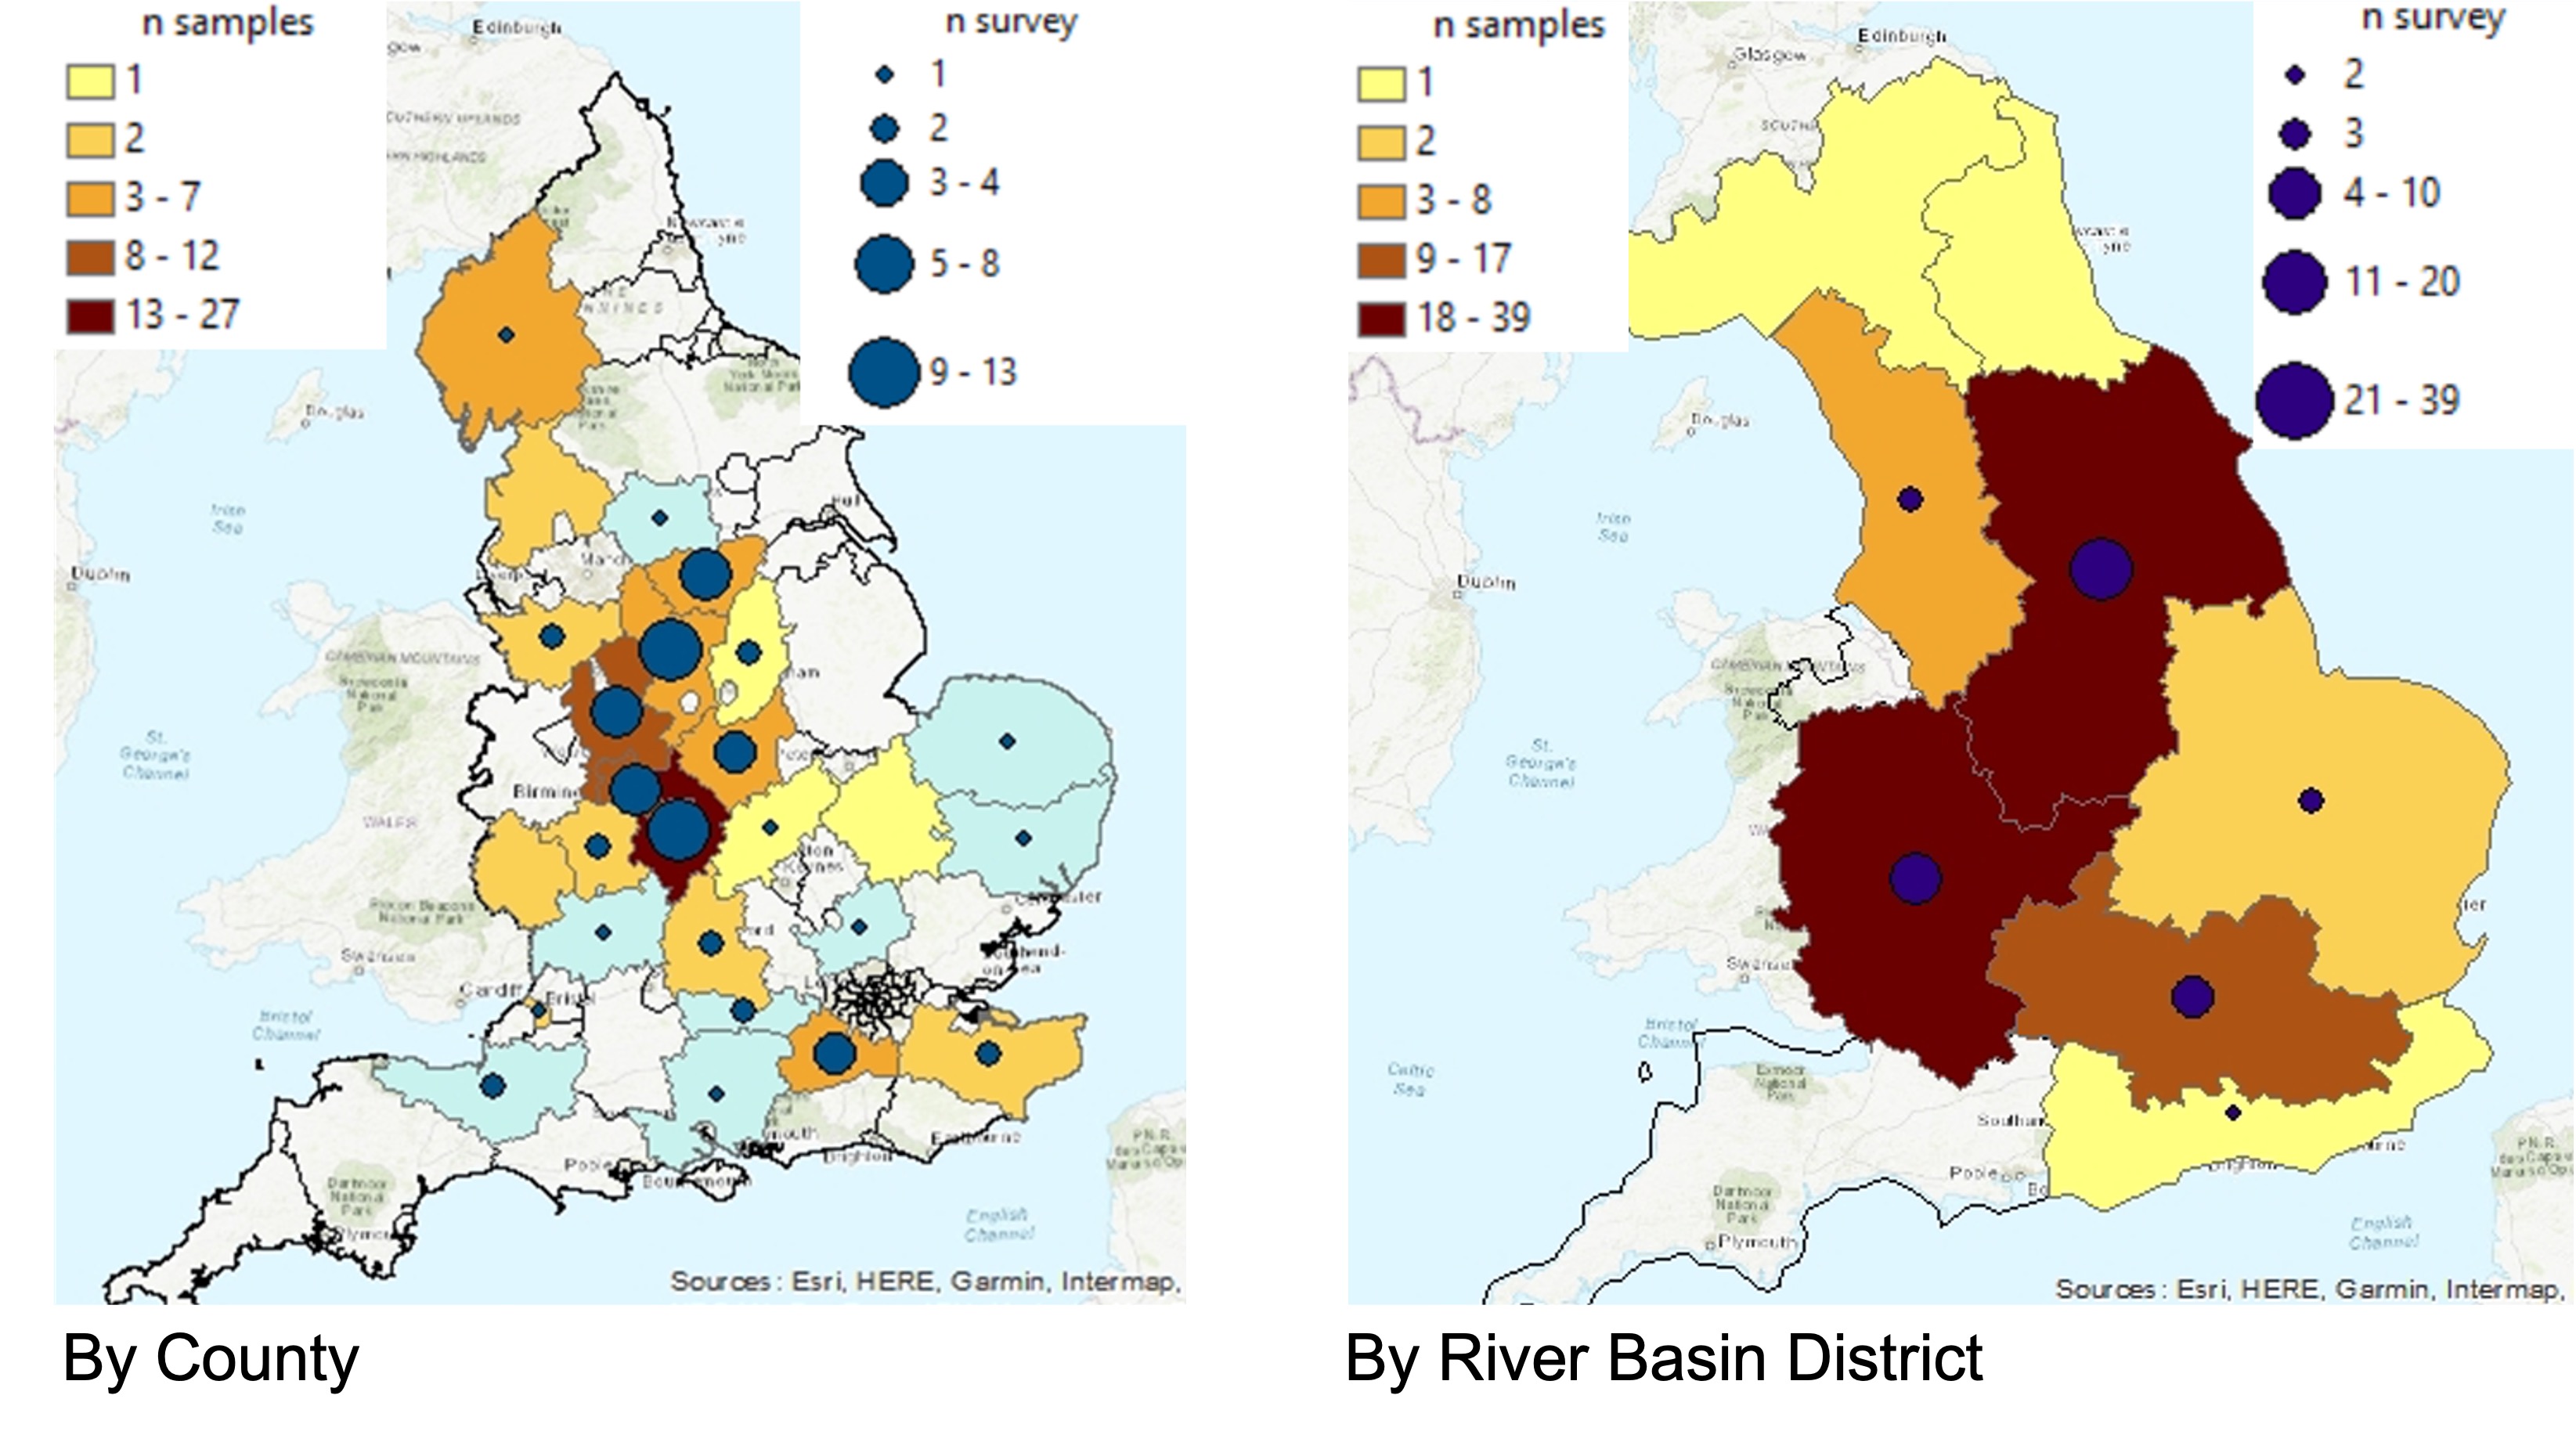 Surveys and samples distributions across England